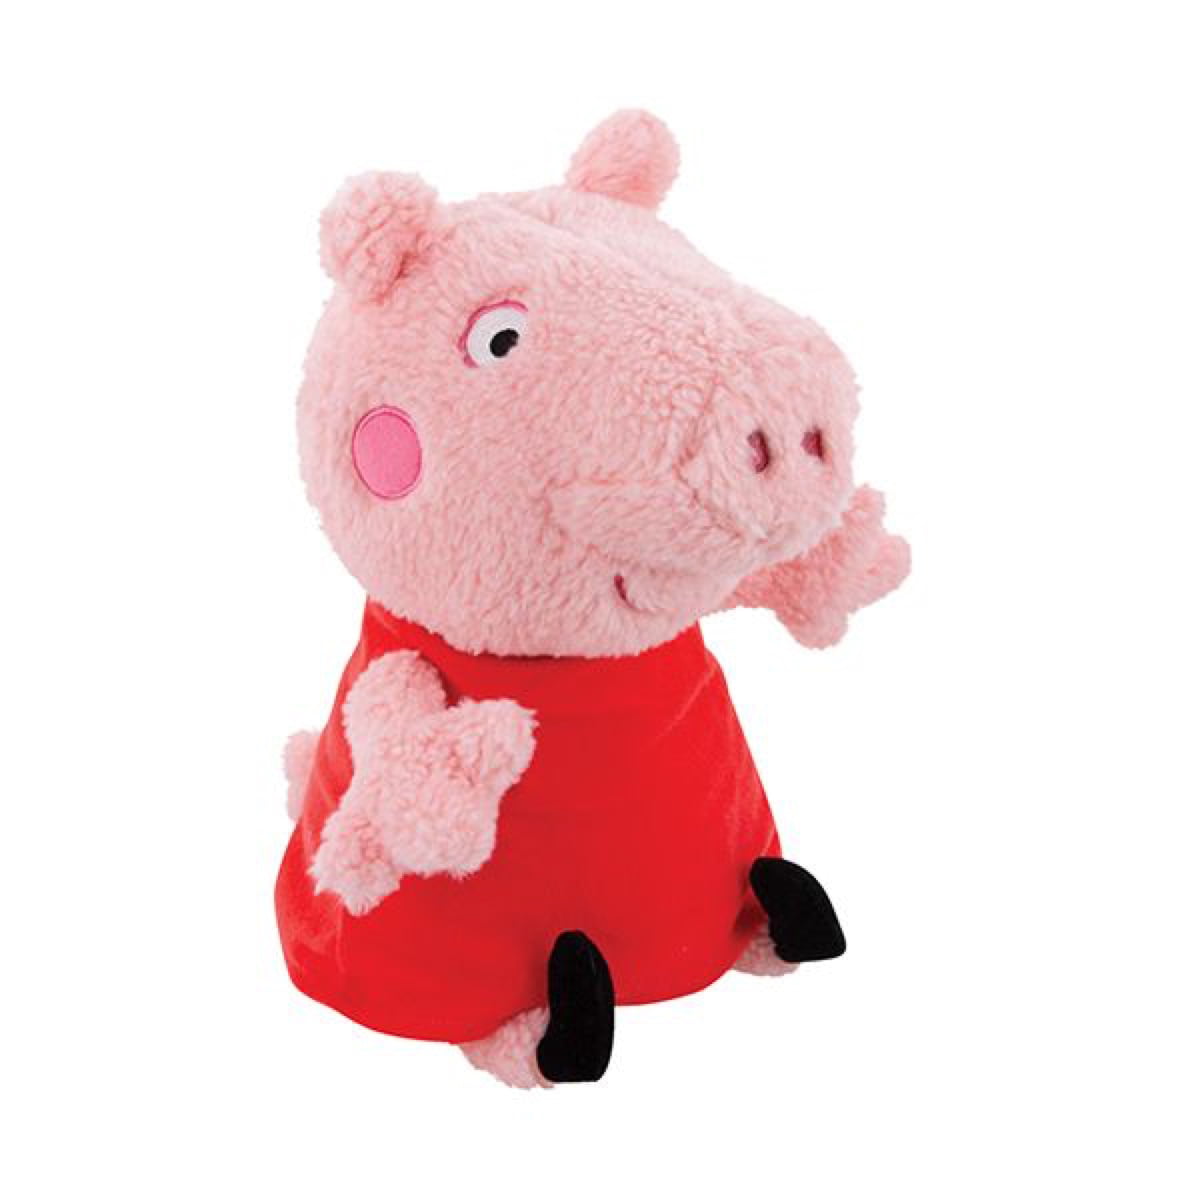 Plush Peppa Pig in Red Dress 13.5 Inches - Walmart.com - Walmart.com